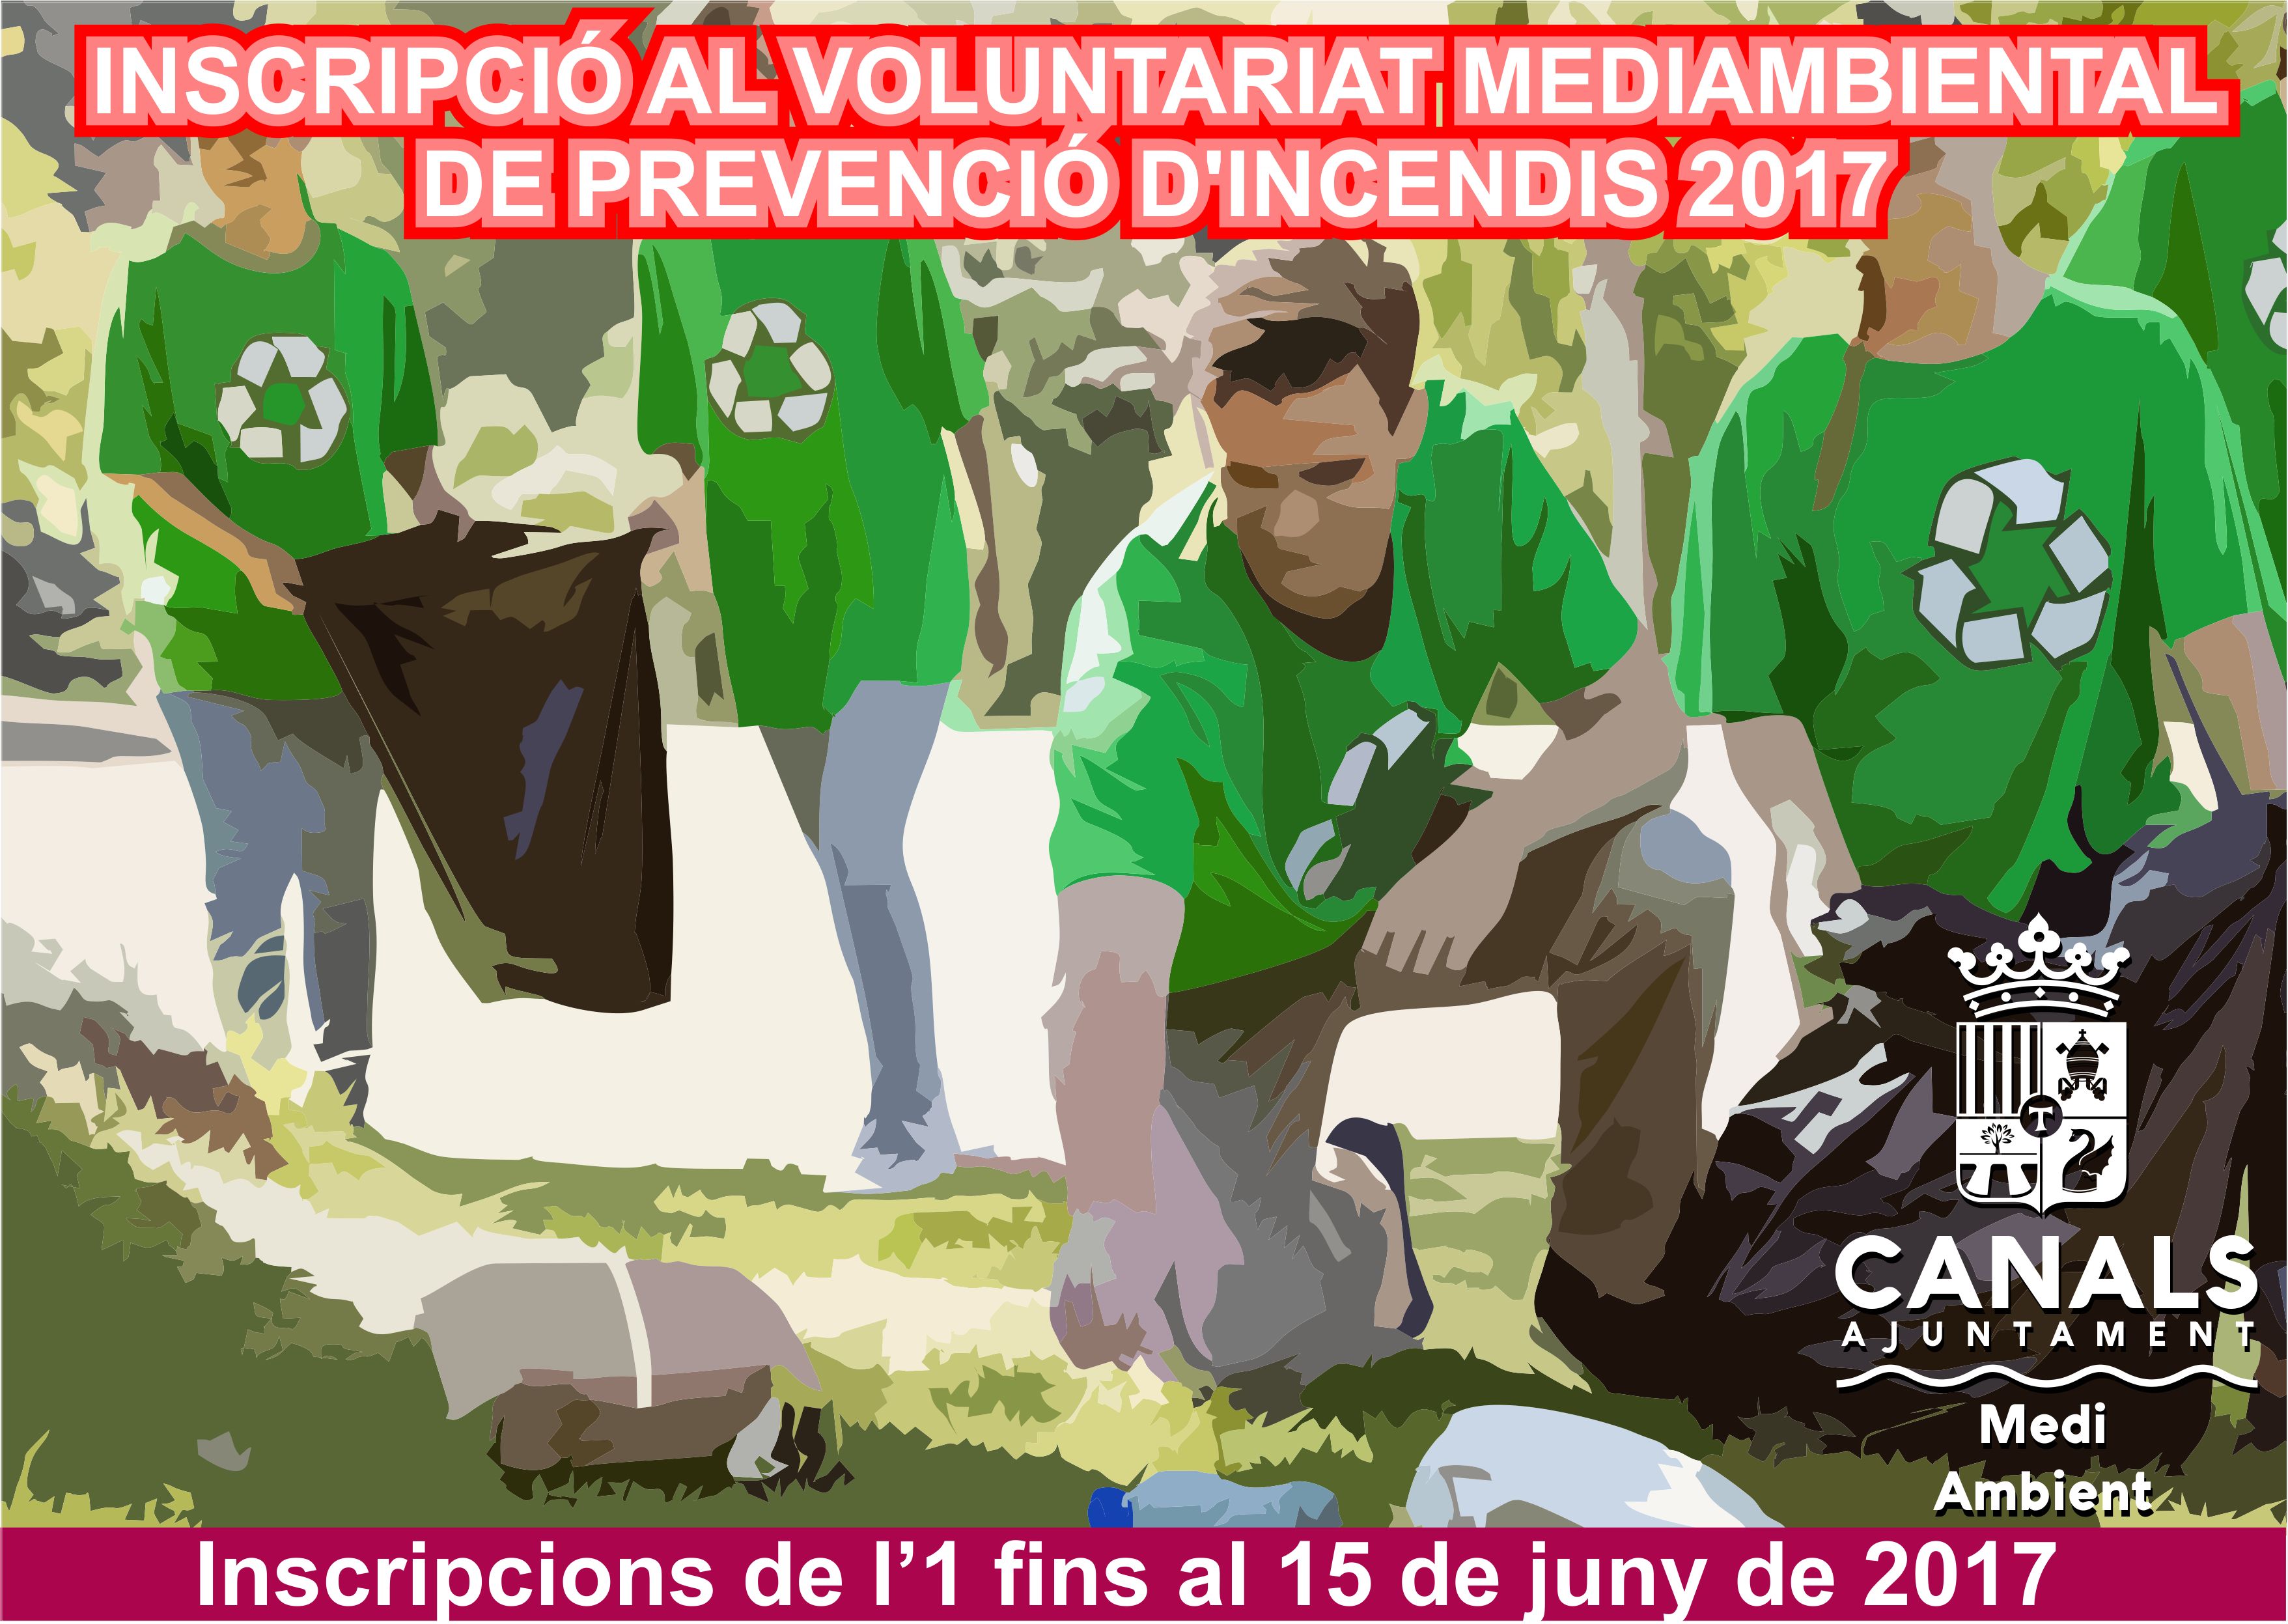 2017.05.29 voluntariat mediambiental. Ajuntament de Canals